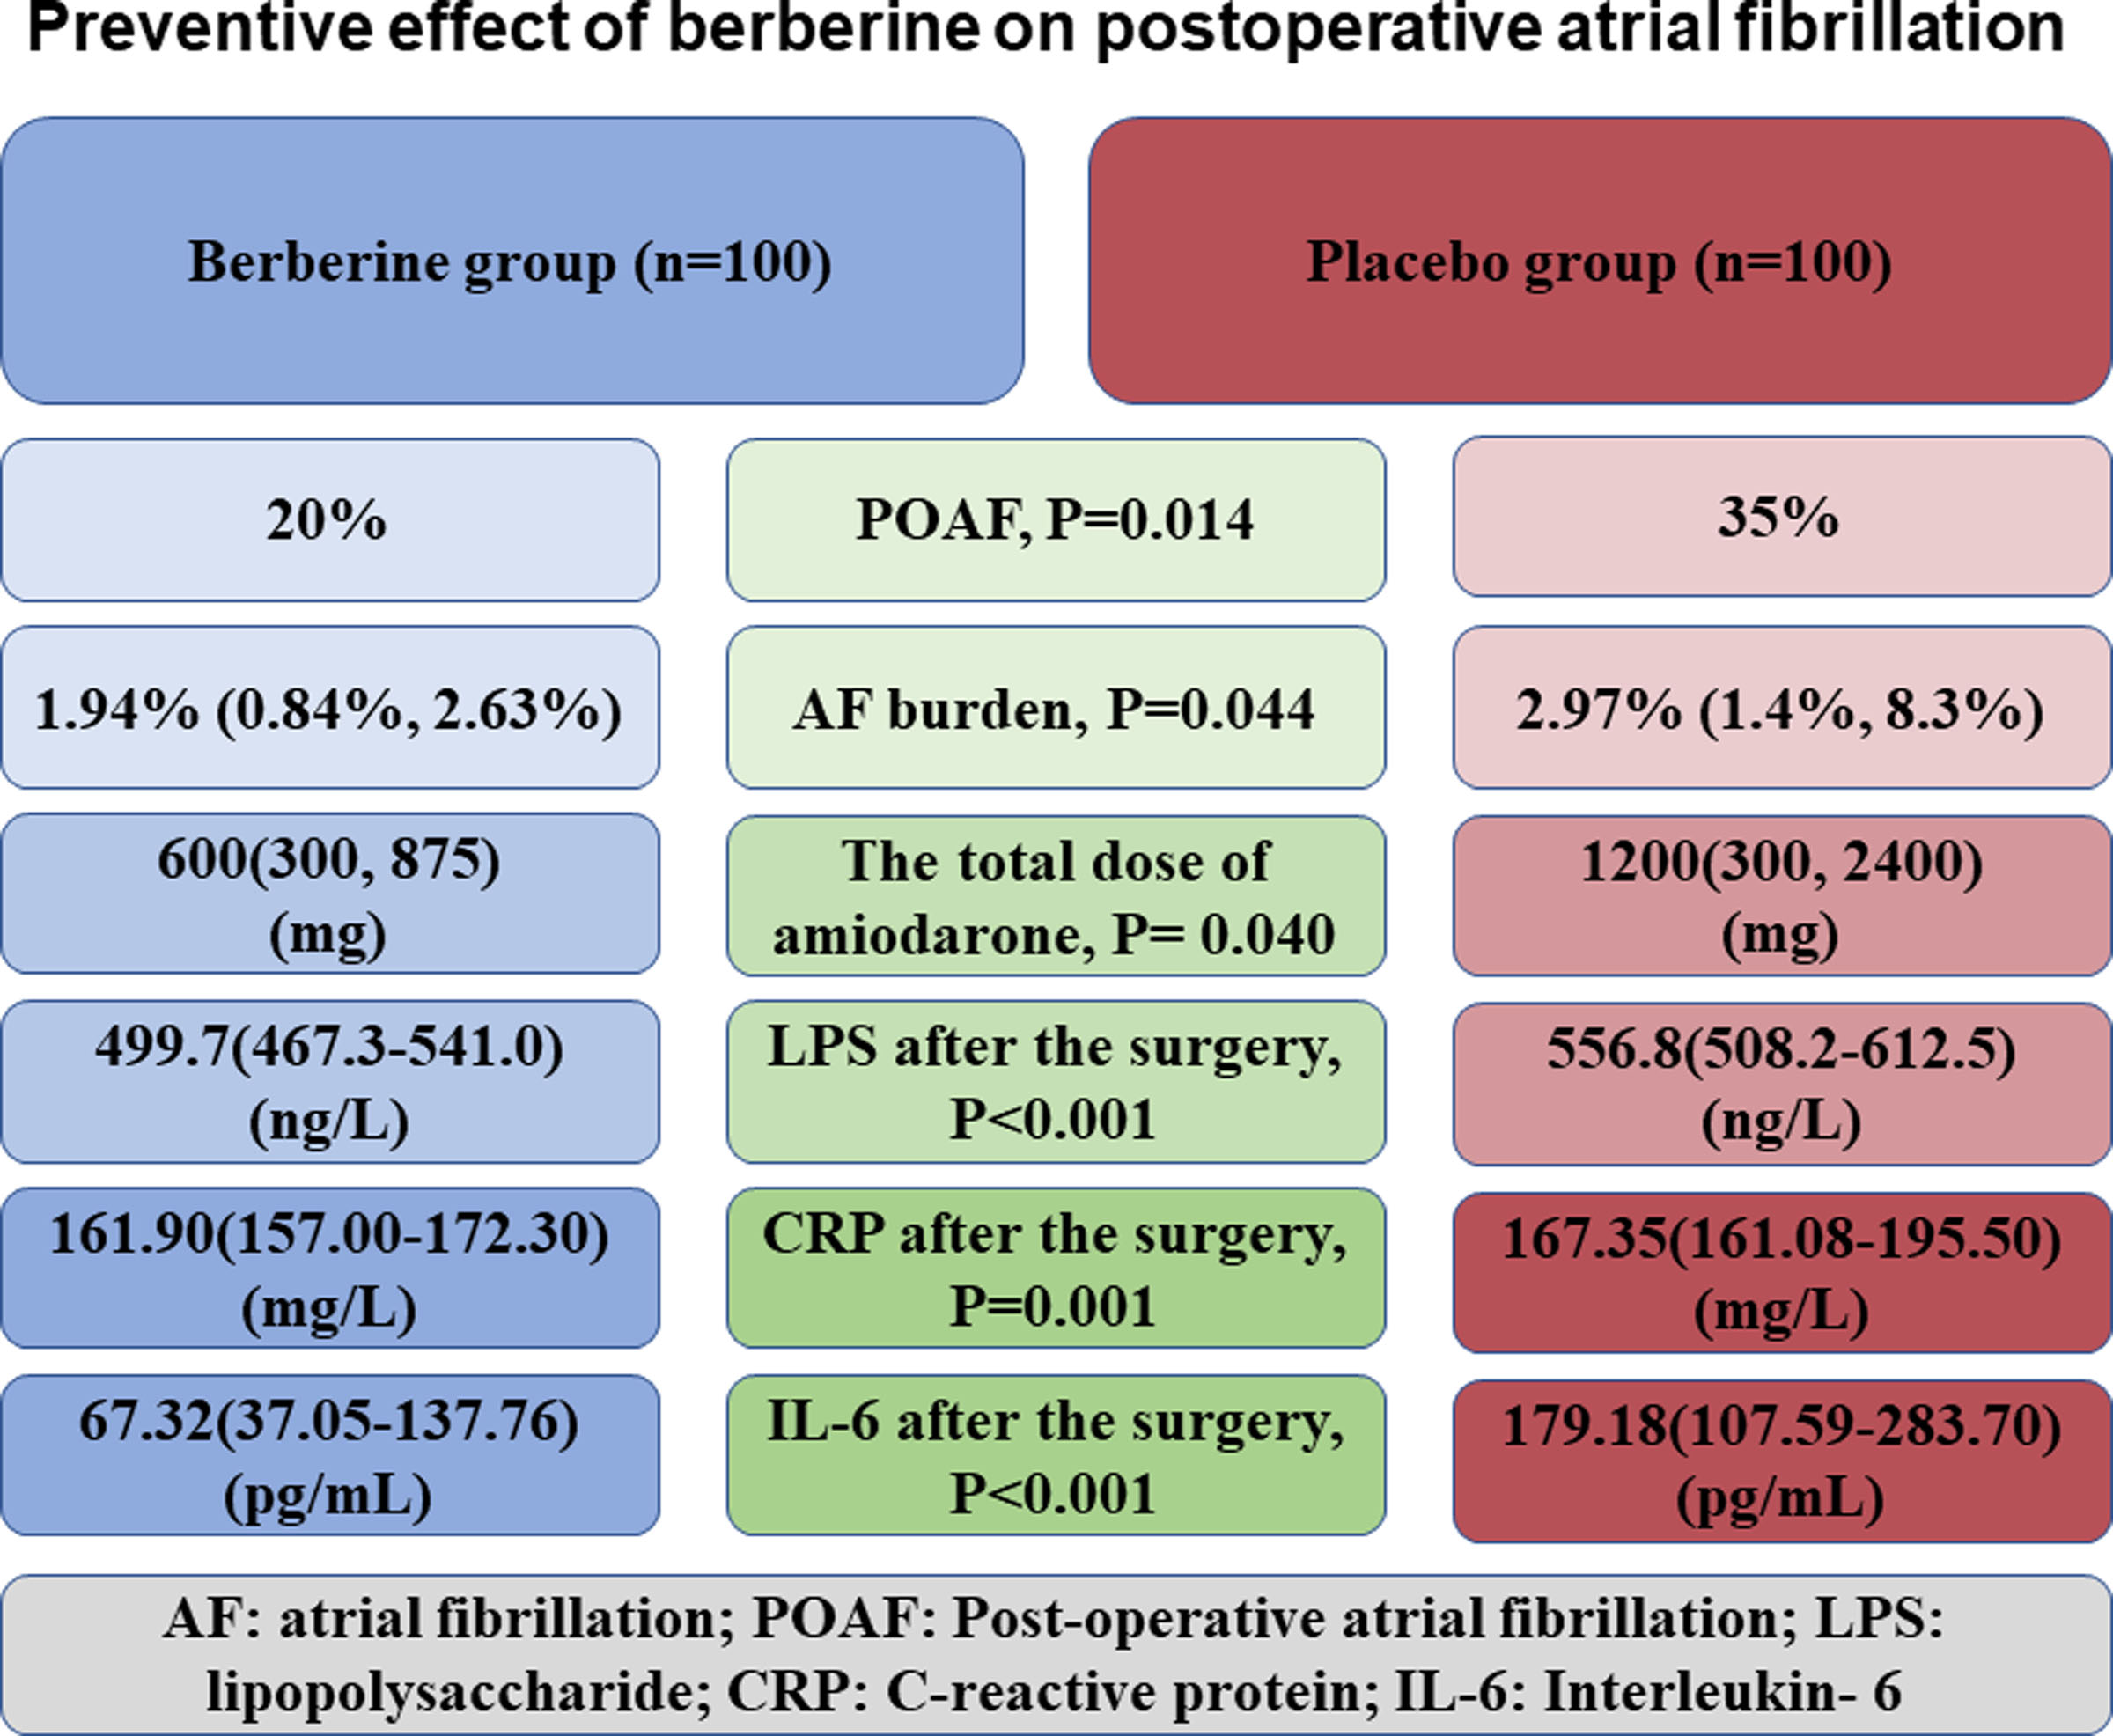 Preventive Effect of Berberine on Postoperative Atrial Fibrillation